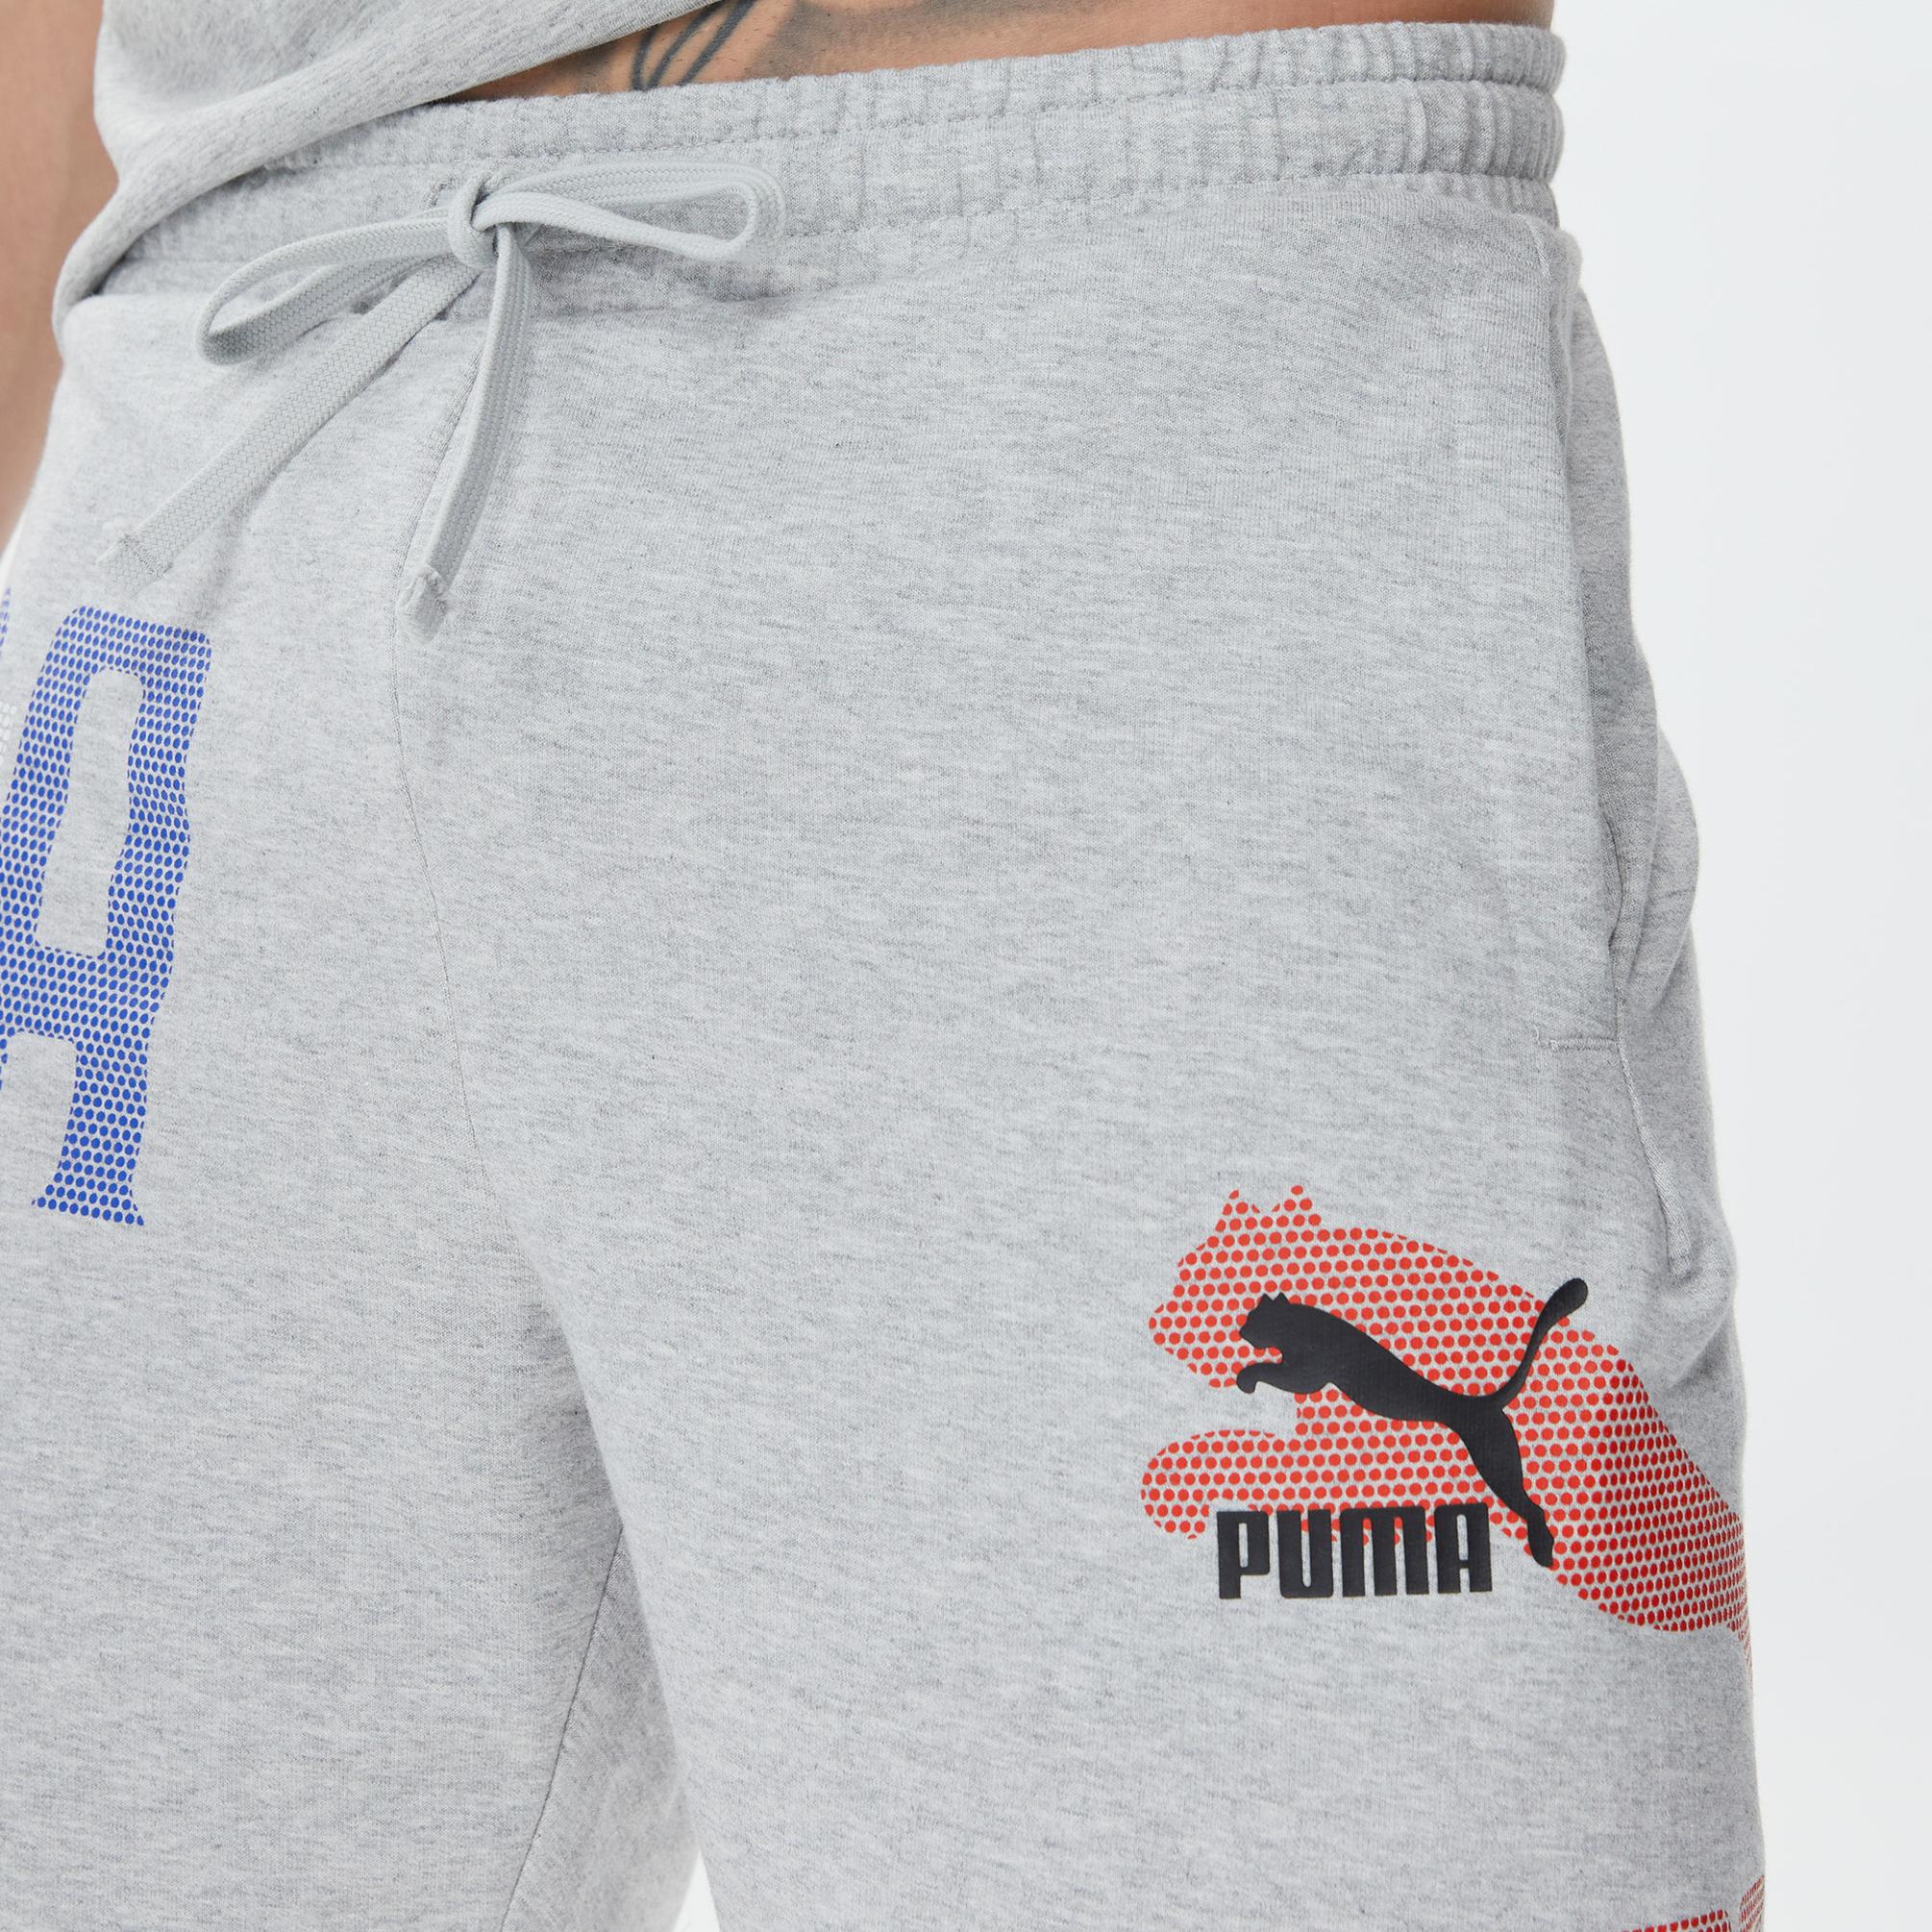  Puma Classics GEN. Shorts 8" Erkek Gri Şort